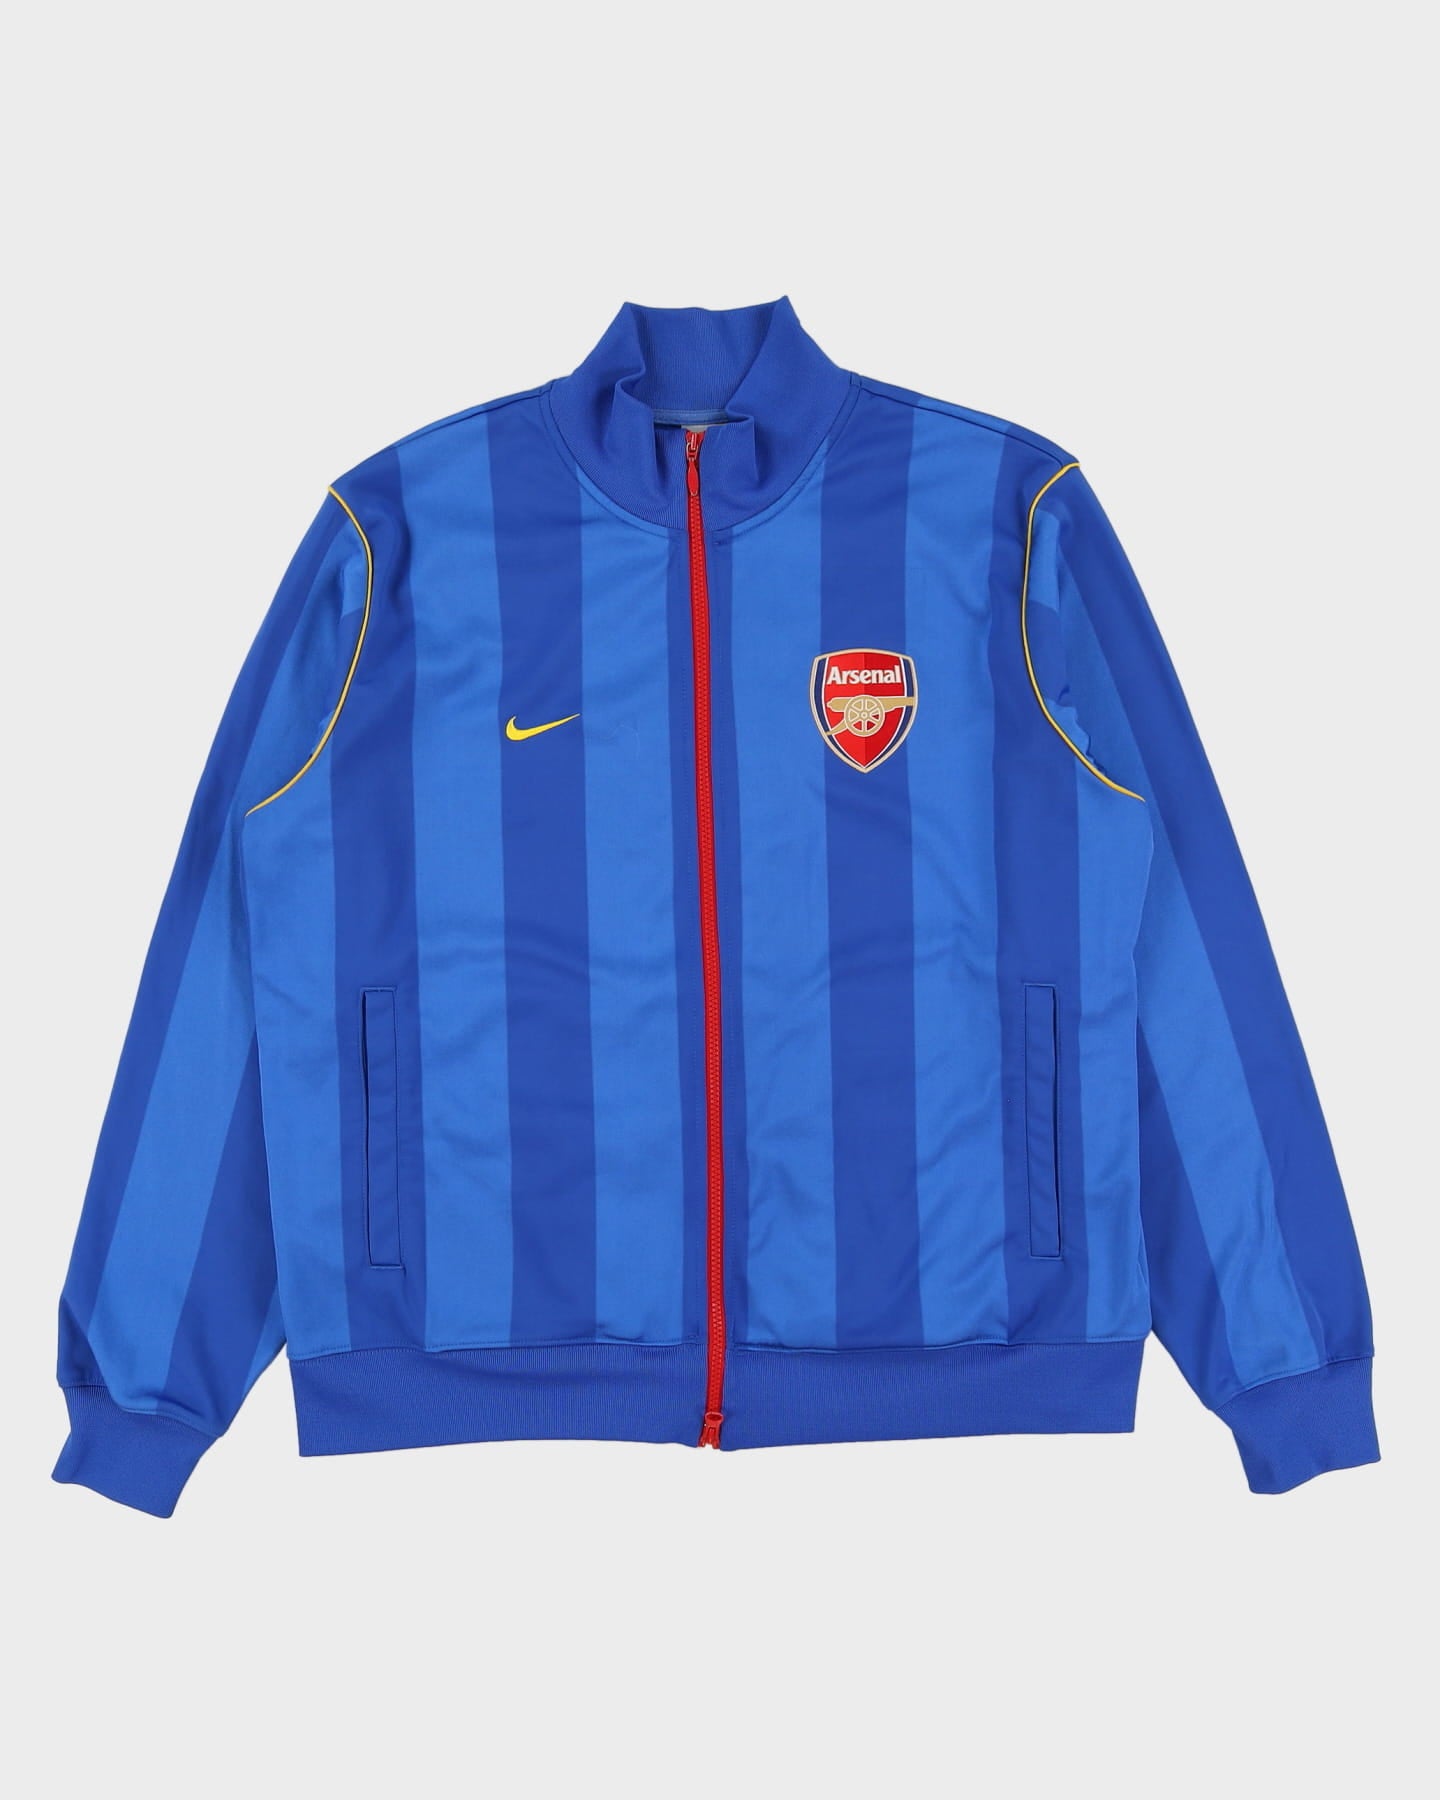 Arsenal Nike Blue Track Jacket - L